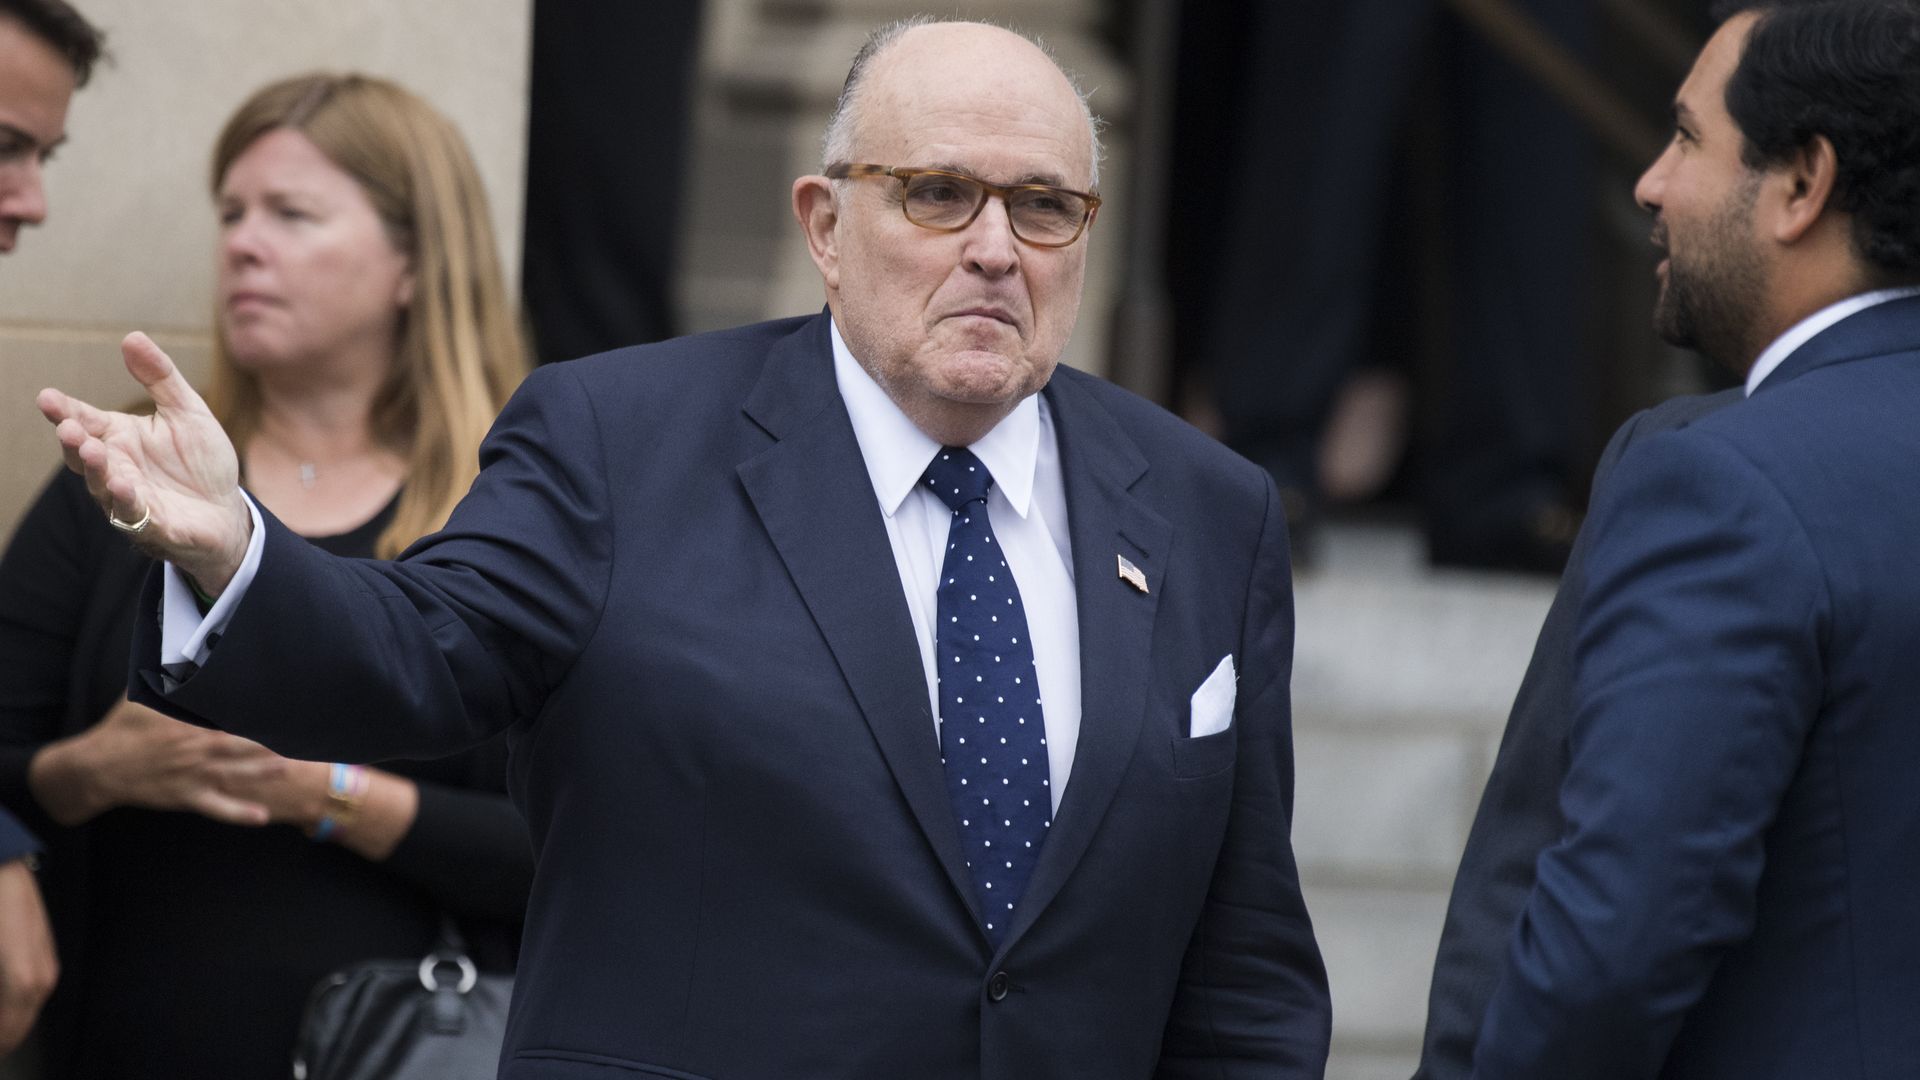 Rudy Giuliani purses lips and raises hand